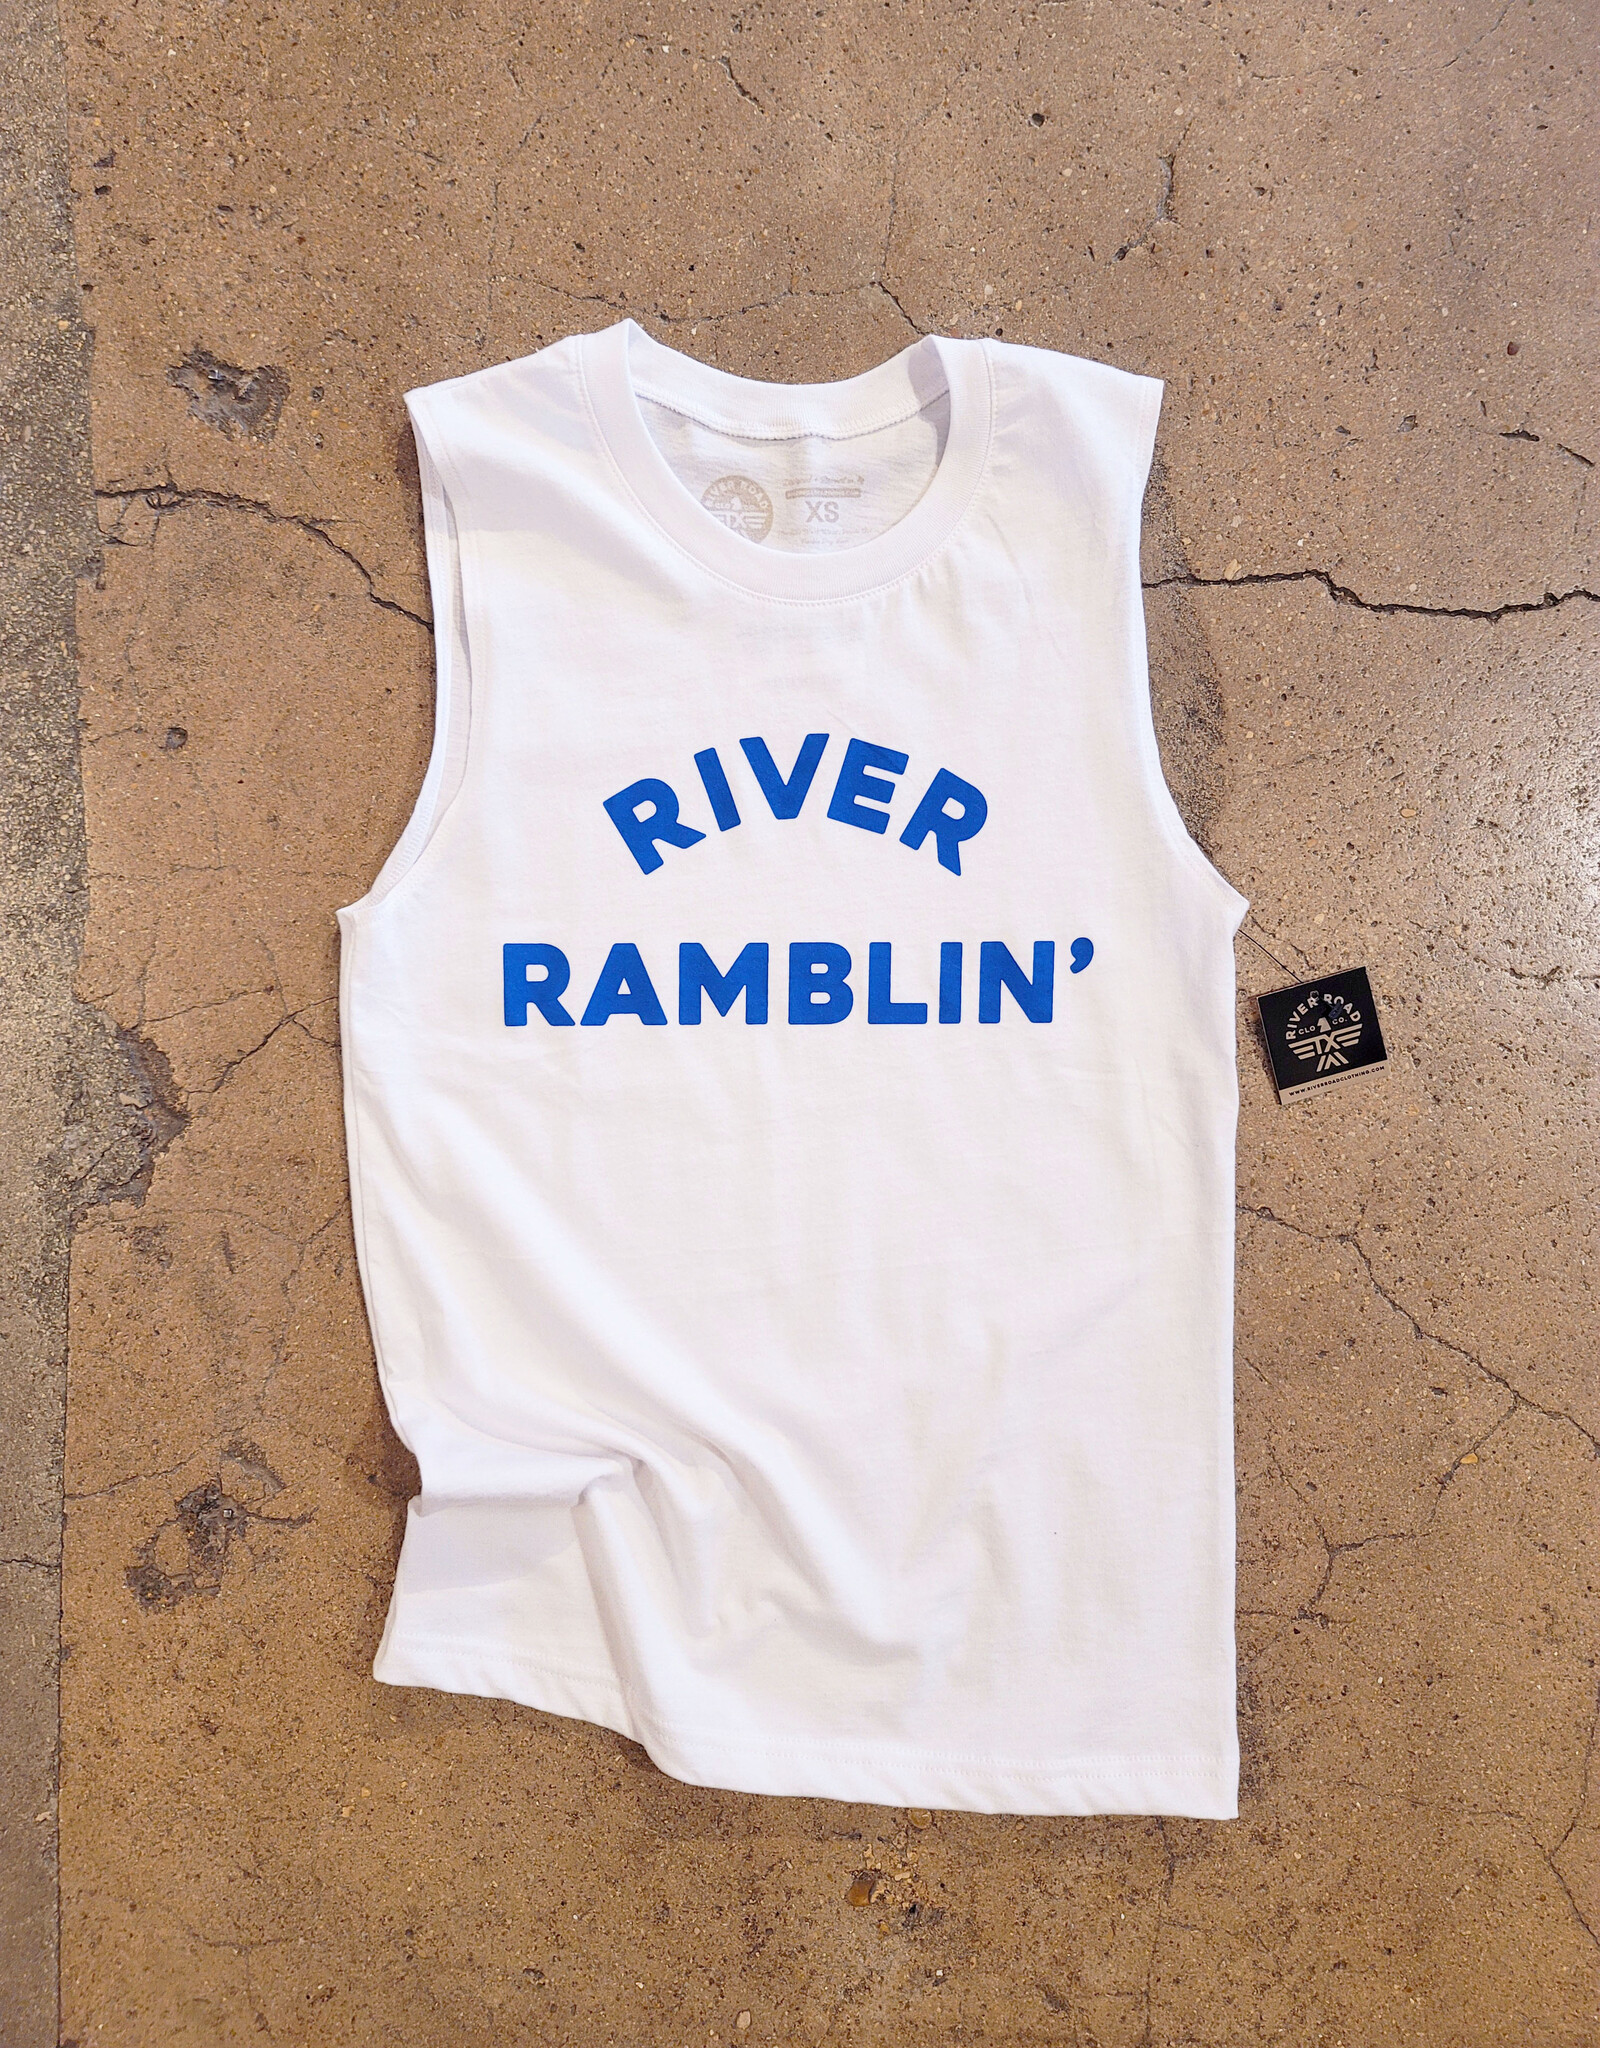 River Ramblin' Tank by River Road Clothing